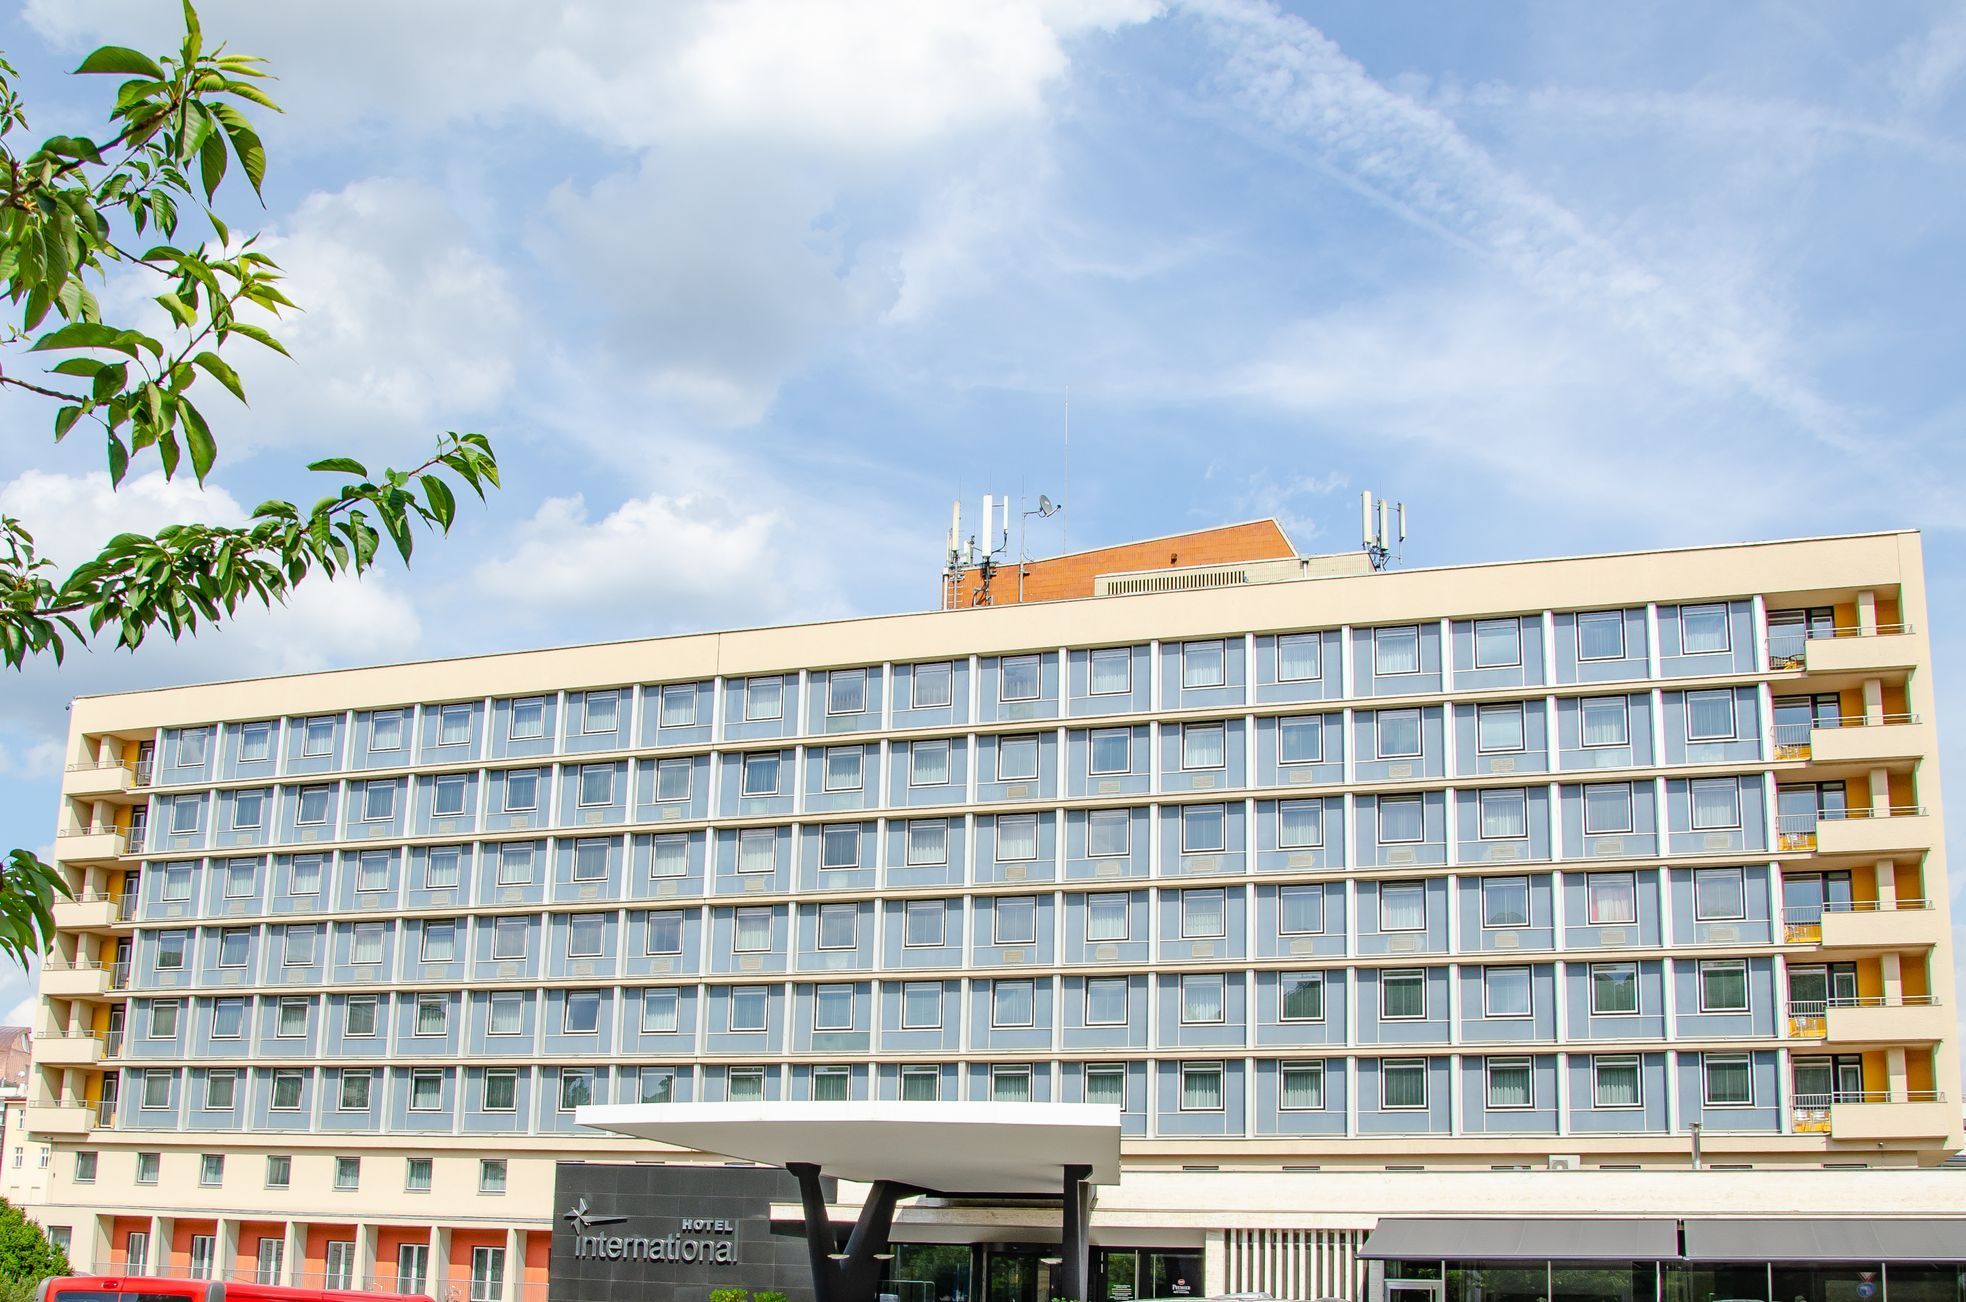 Hotel International, Brno